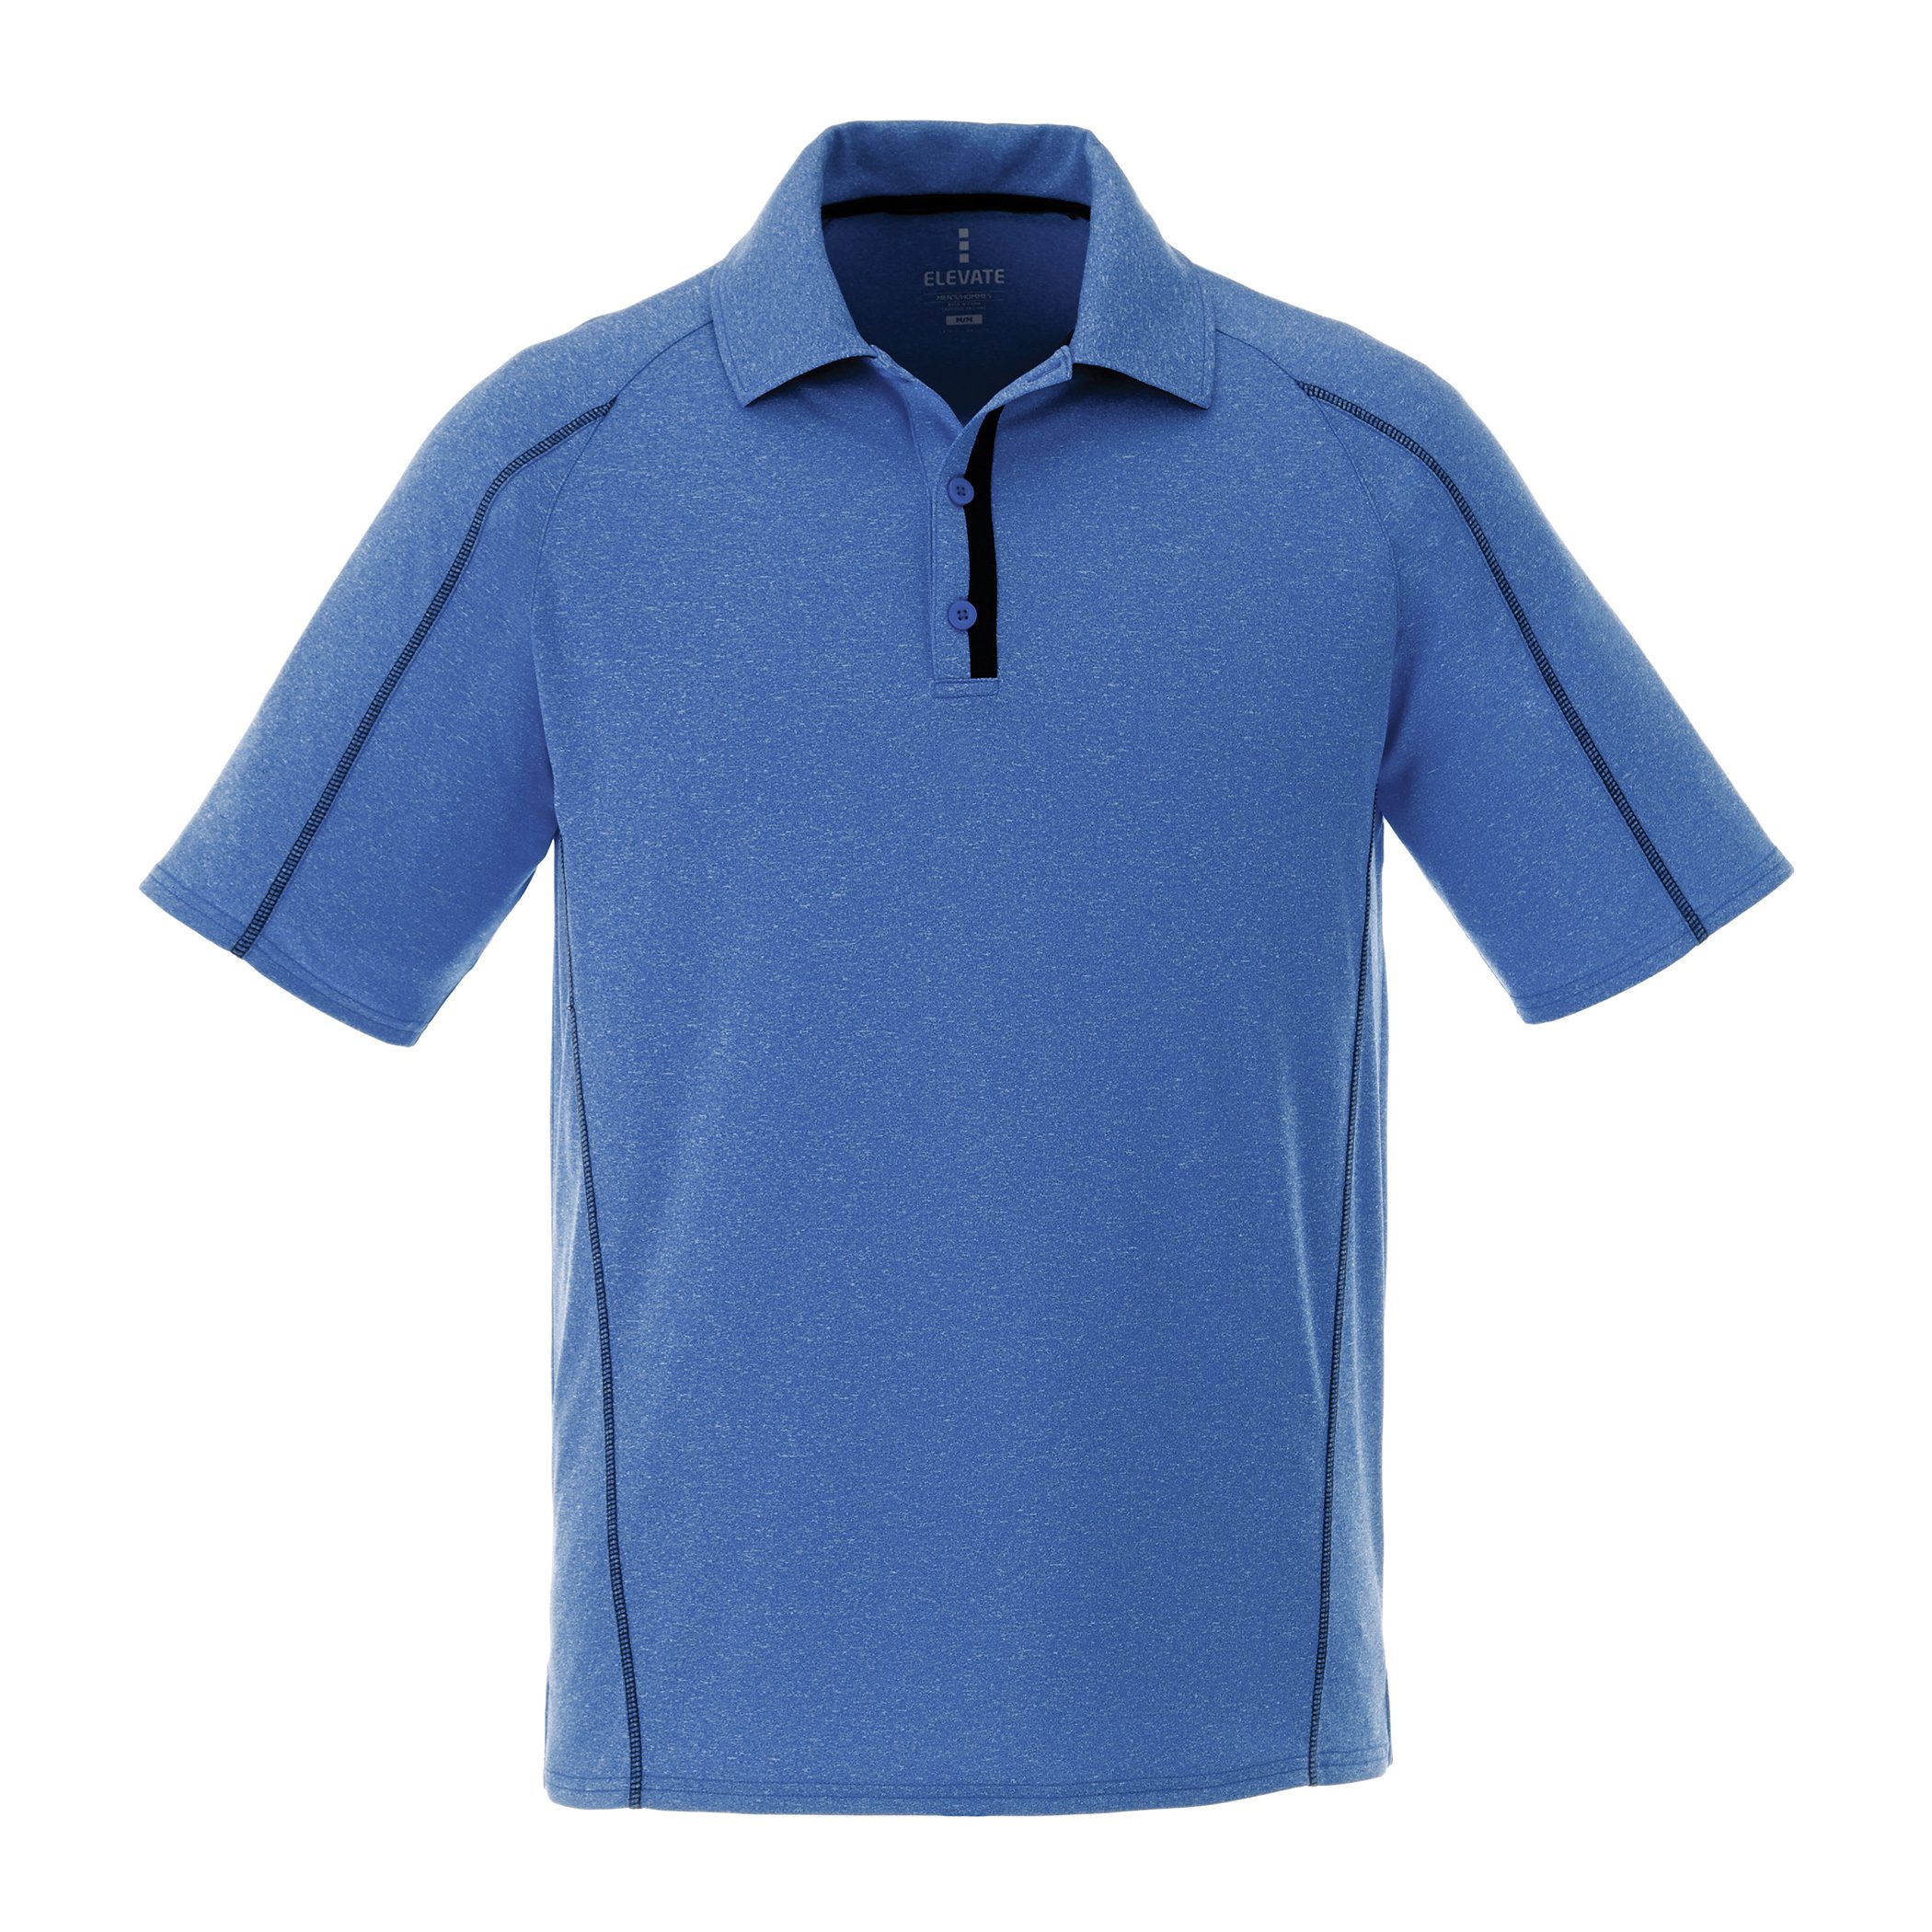 Trimark Men's MACTA Short Sleeve Polo #TM16627 New Royal Heather / Black Smoke